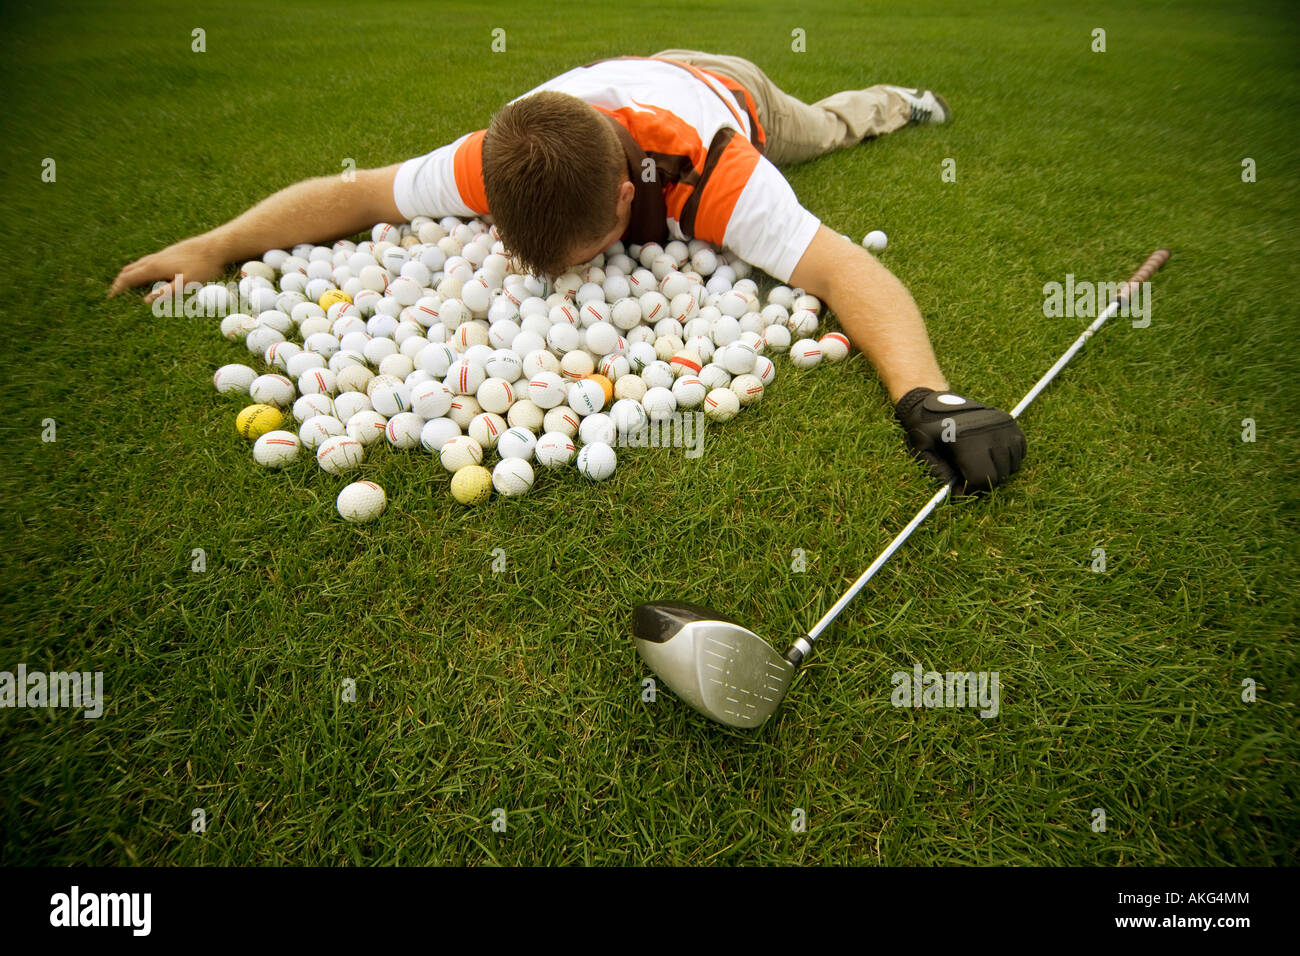 Man lying in pile of golf balls Stock Photo